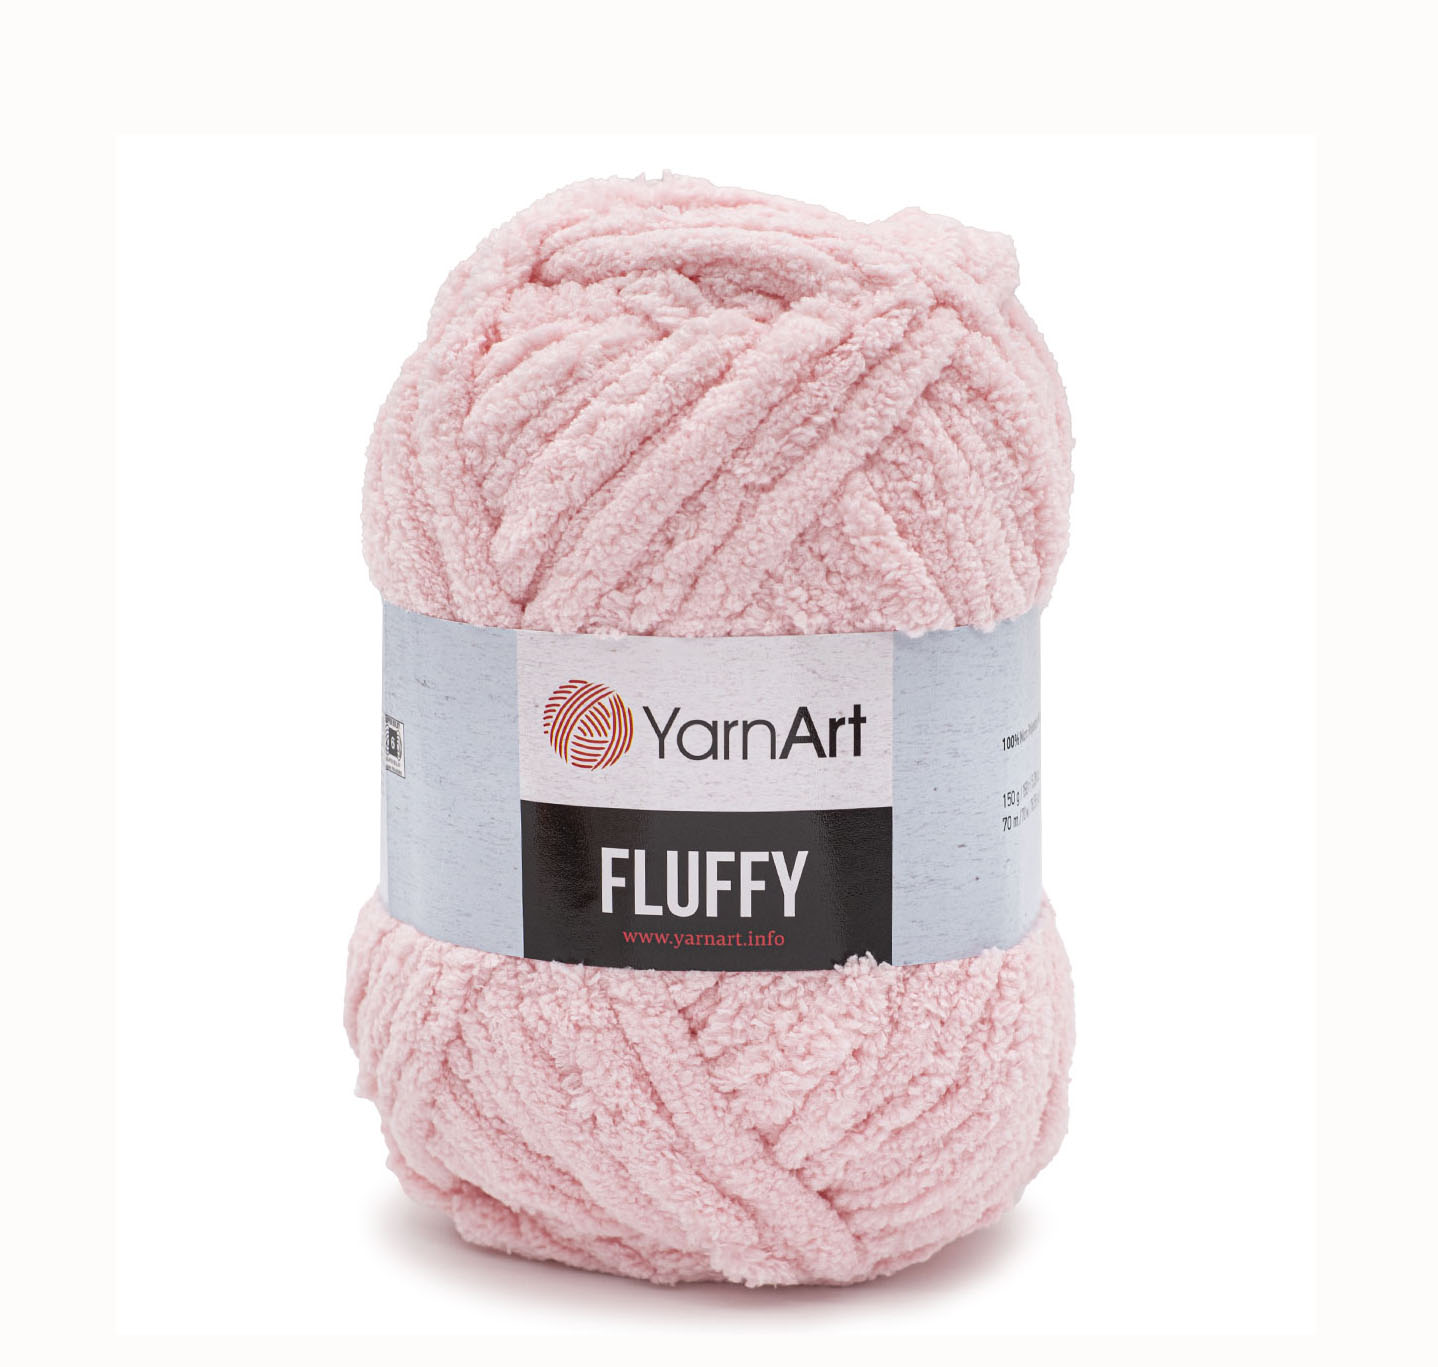 YarnArt Fluffy 714 